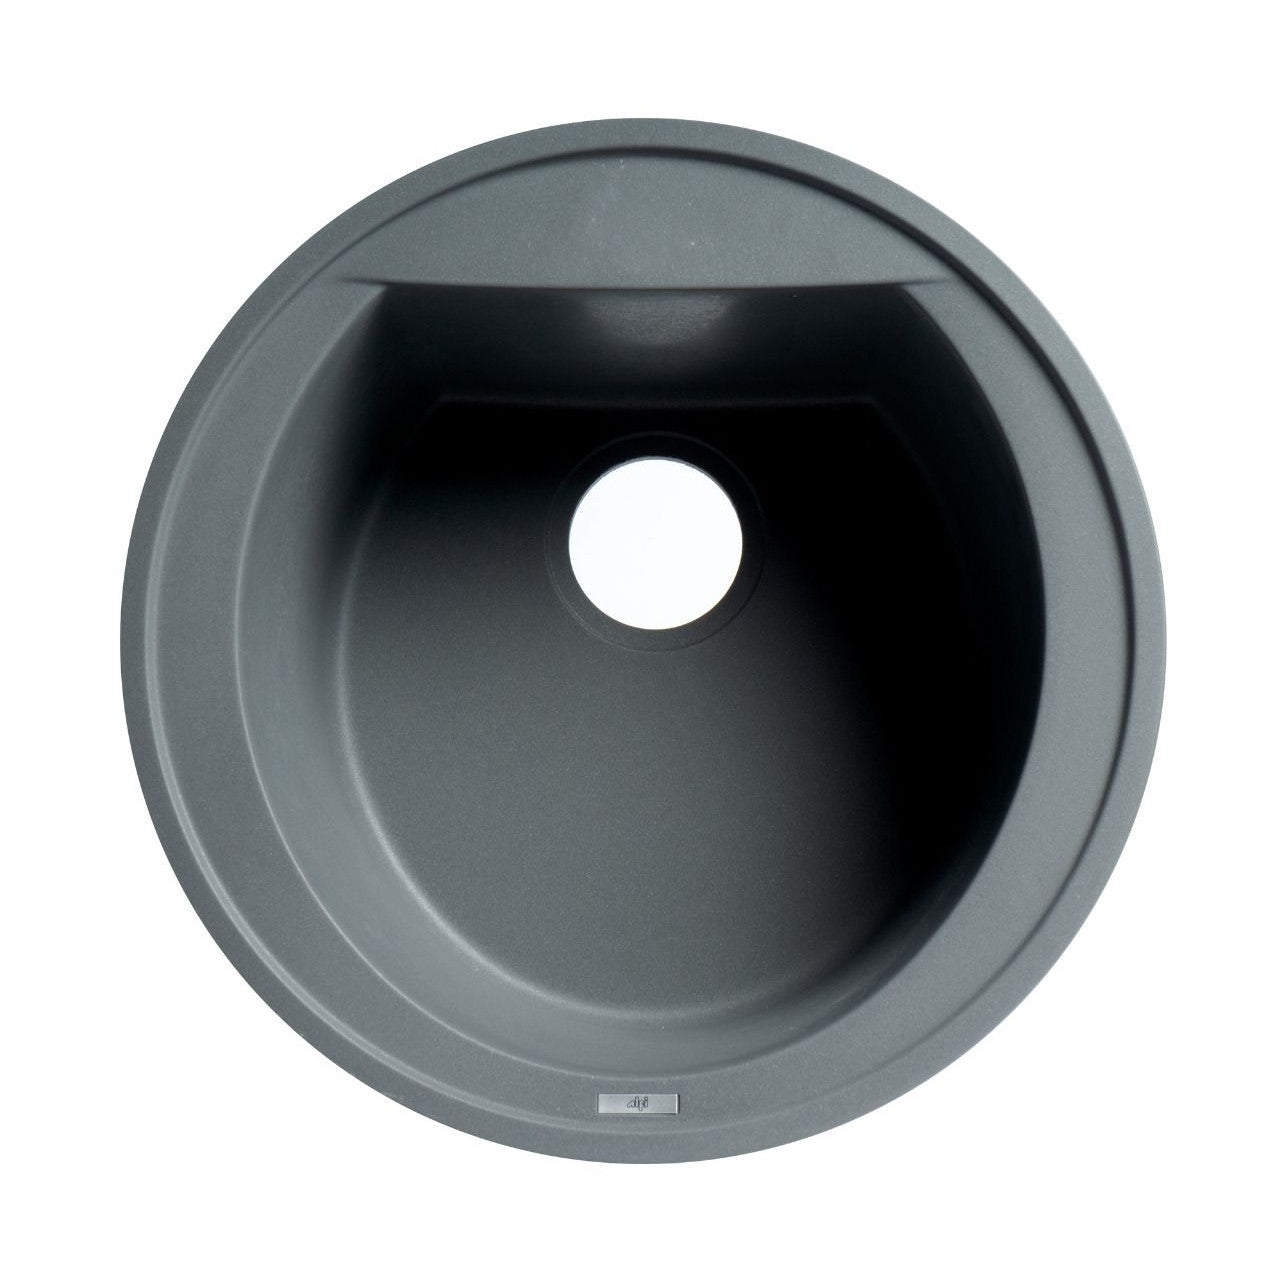 ALFI Brand AB2020DI-T Titanium 20" Drop-In Round Granite Composite Kitchen Prep Sink